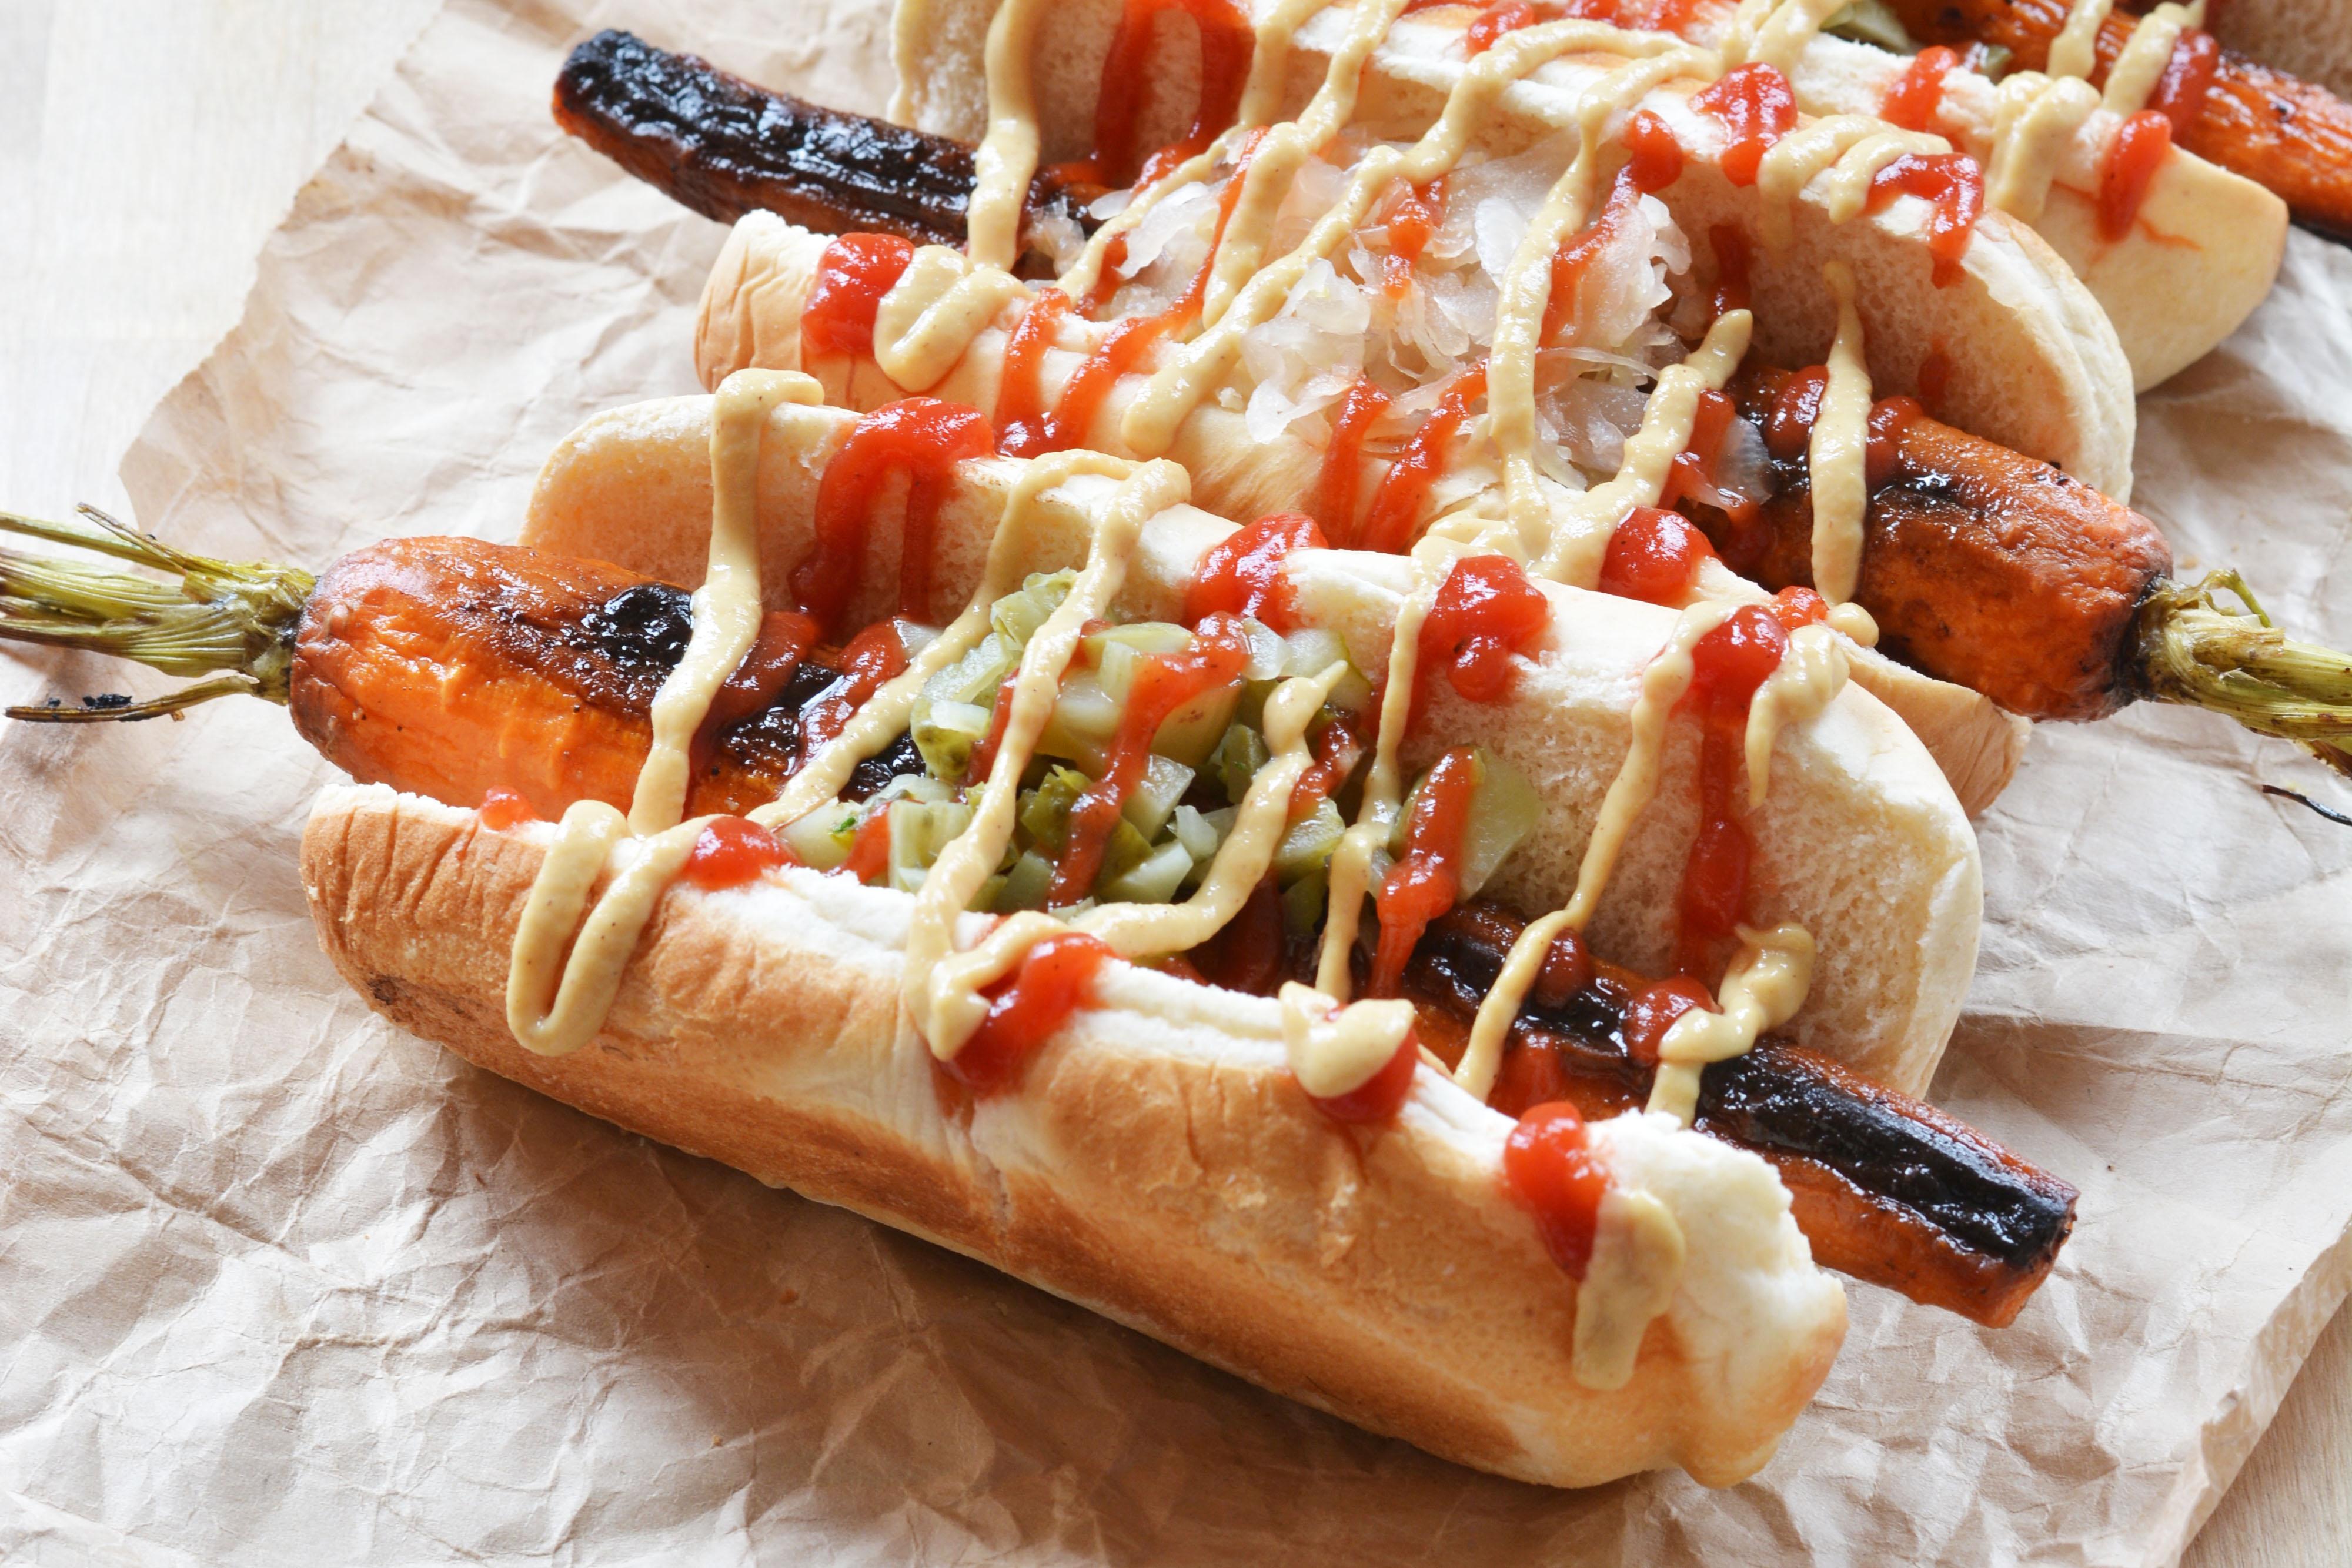 Whole Foods Market retail store vegan hot dog